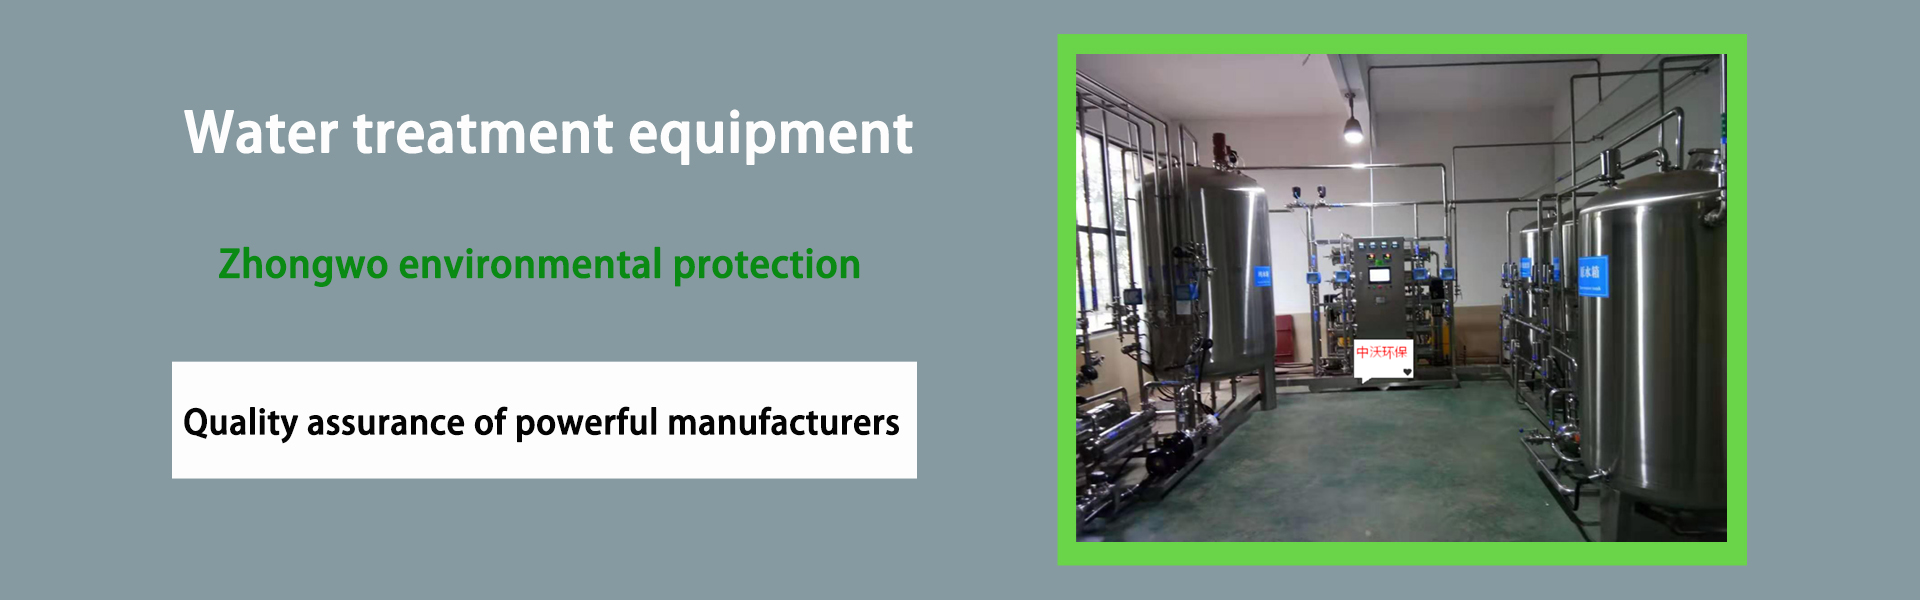 equipamento de tratamento de água, equipamento de purificação de água, equipamento de proteção ambiental,Foshan zhongwo Environmental Protection Technology Co Ltd.